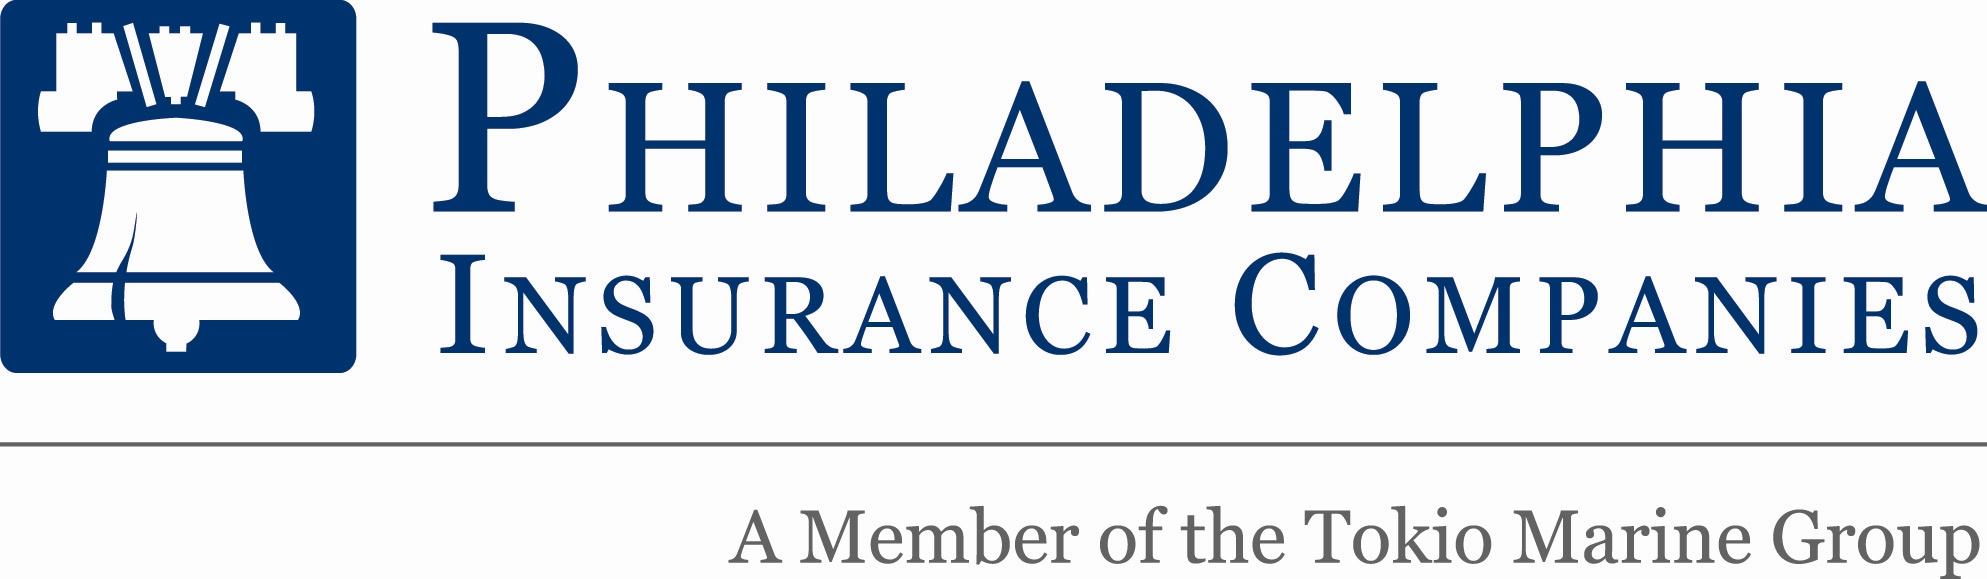 Philadelphia Insurance Co